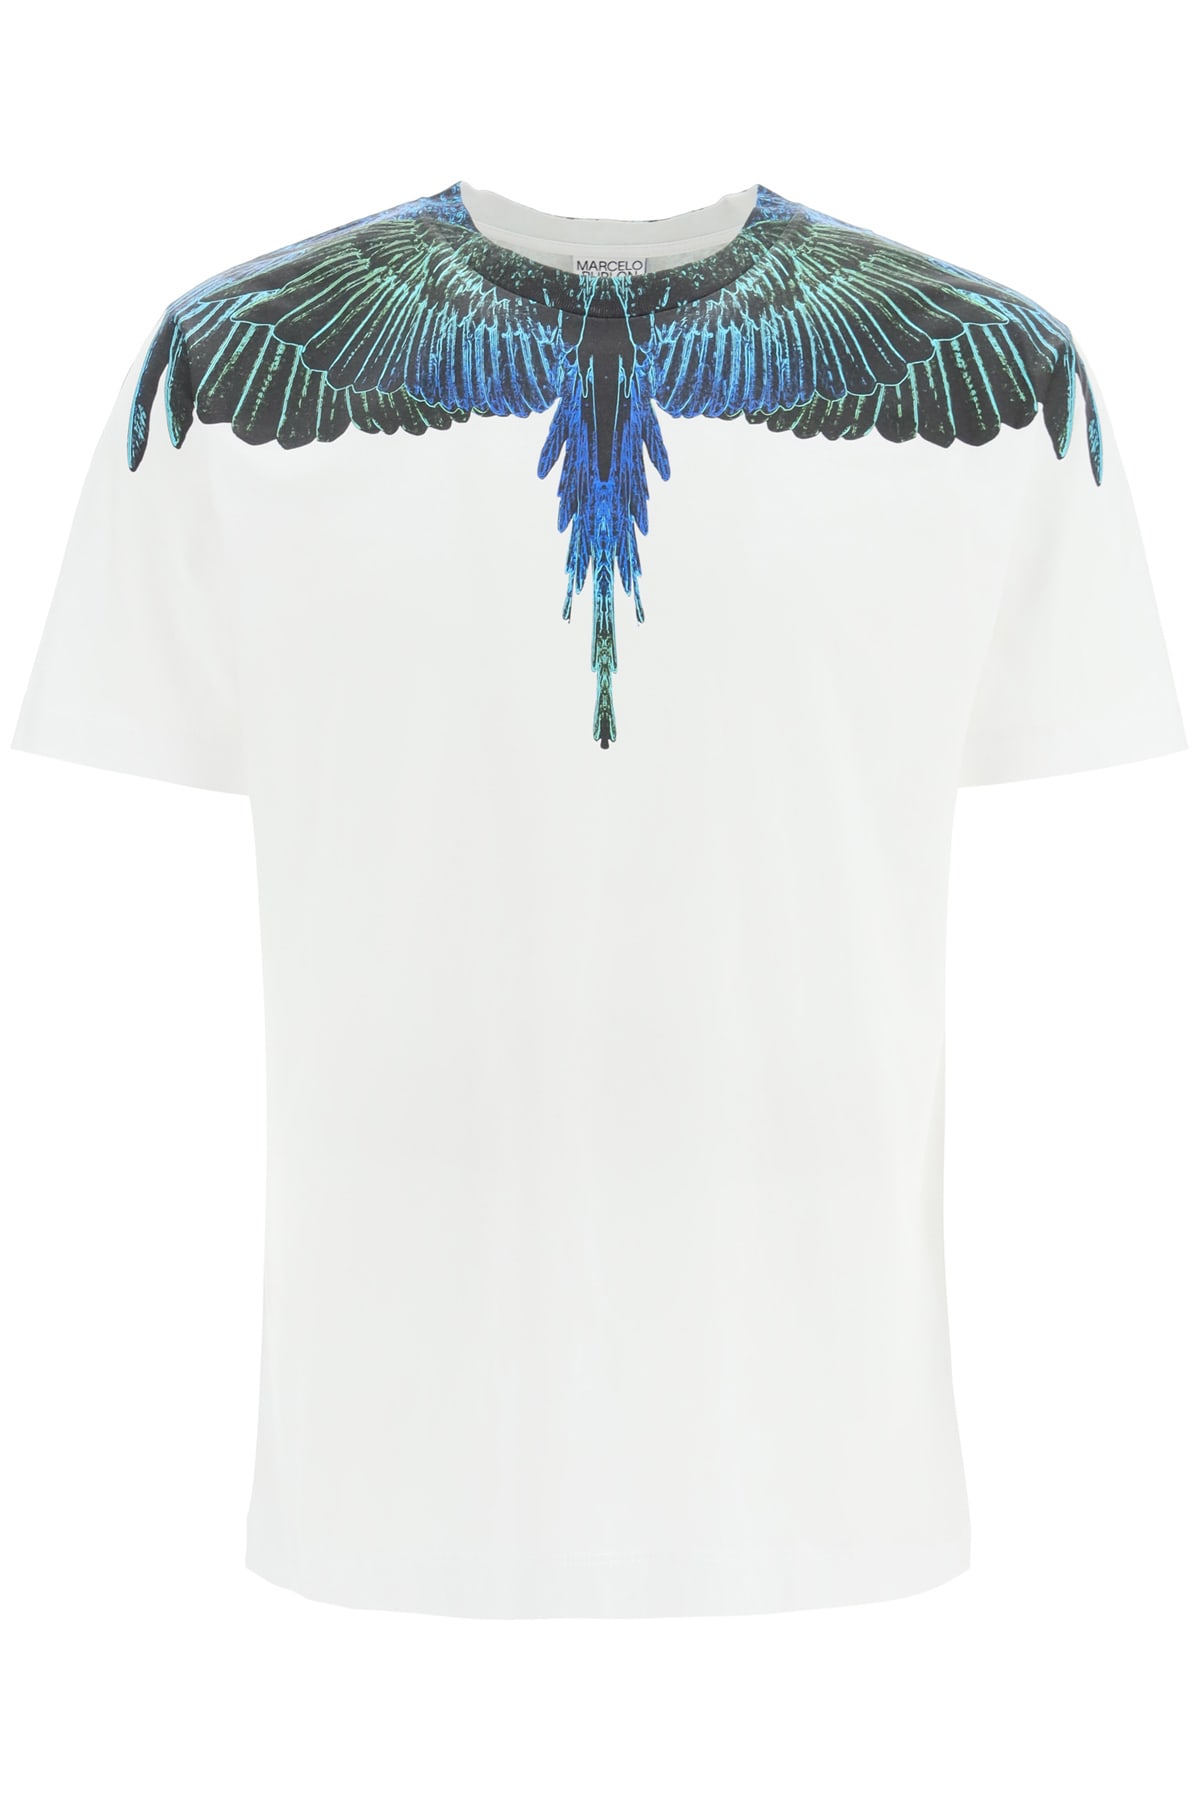 Marcelo Burlon Wings Blue Neon Print T-shirt